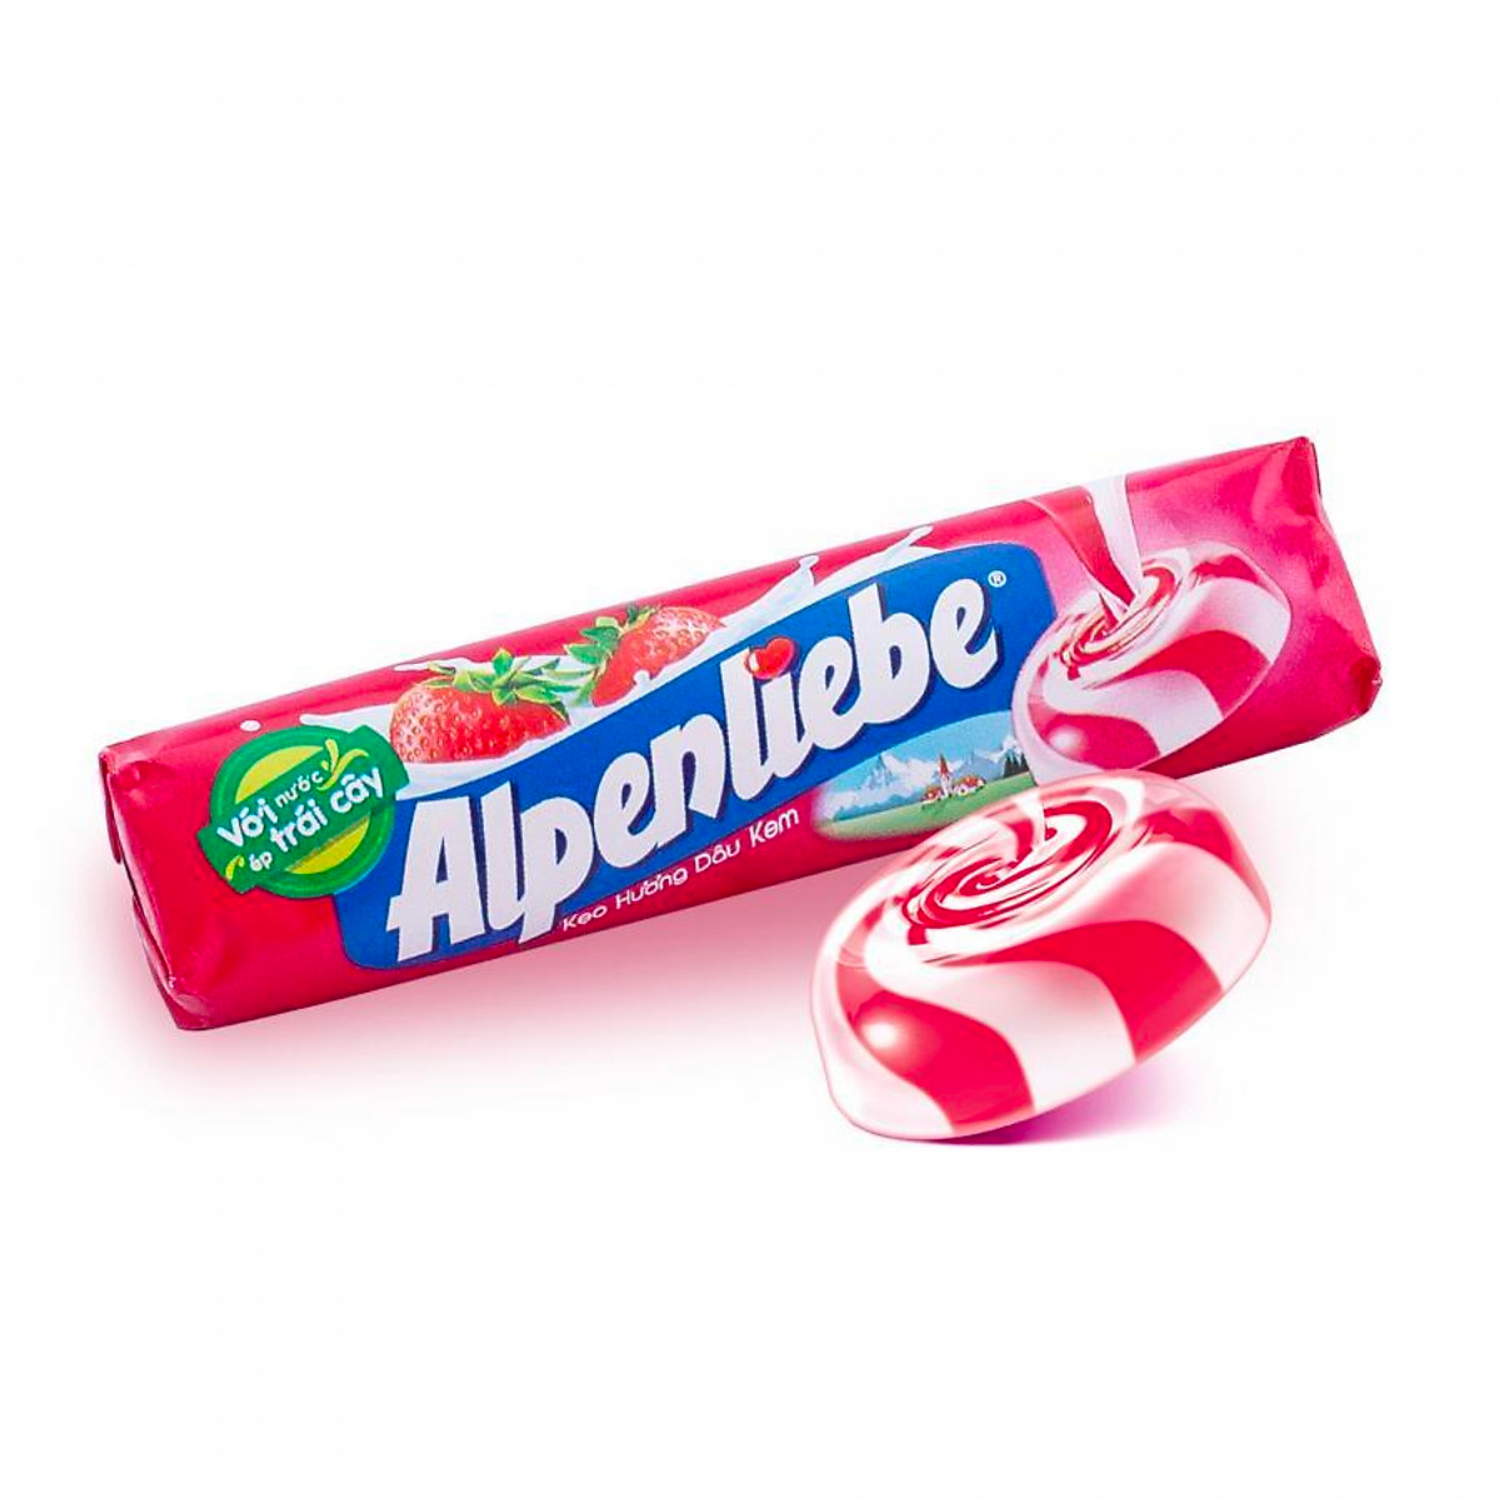 They like sweets. Карамель Alpenliebe. Леденцы Alpenliebe. Леденцы клубника со сливками Alpenliebe. Альпенлибе конфеты.